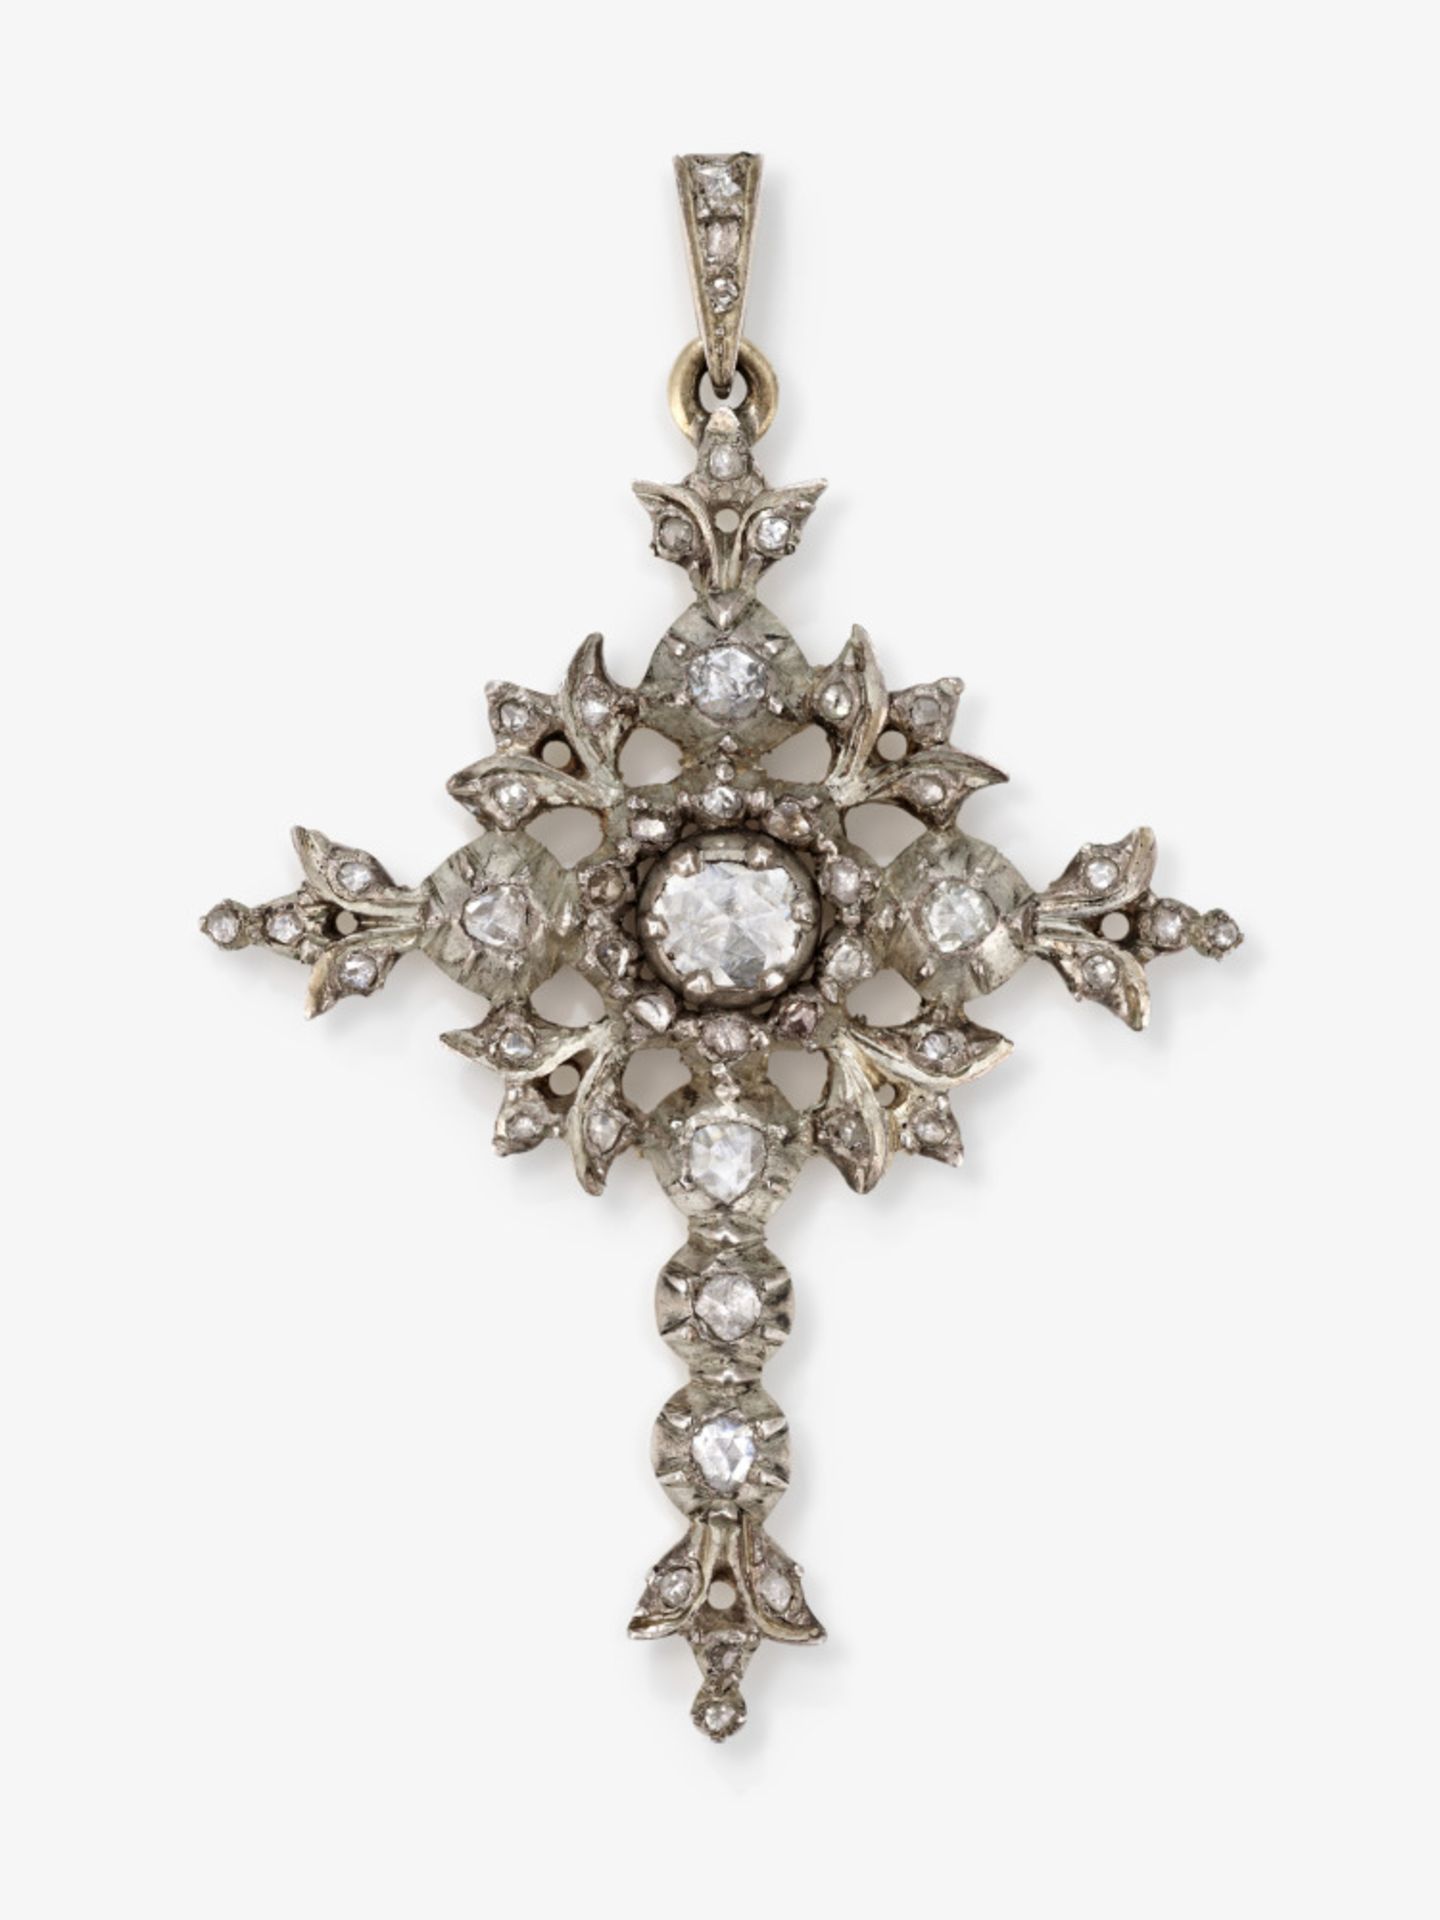 A rare cross pendant with diamonds - France, circa 1740-1750